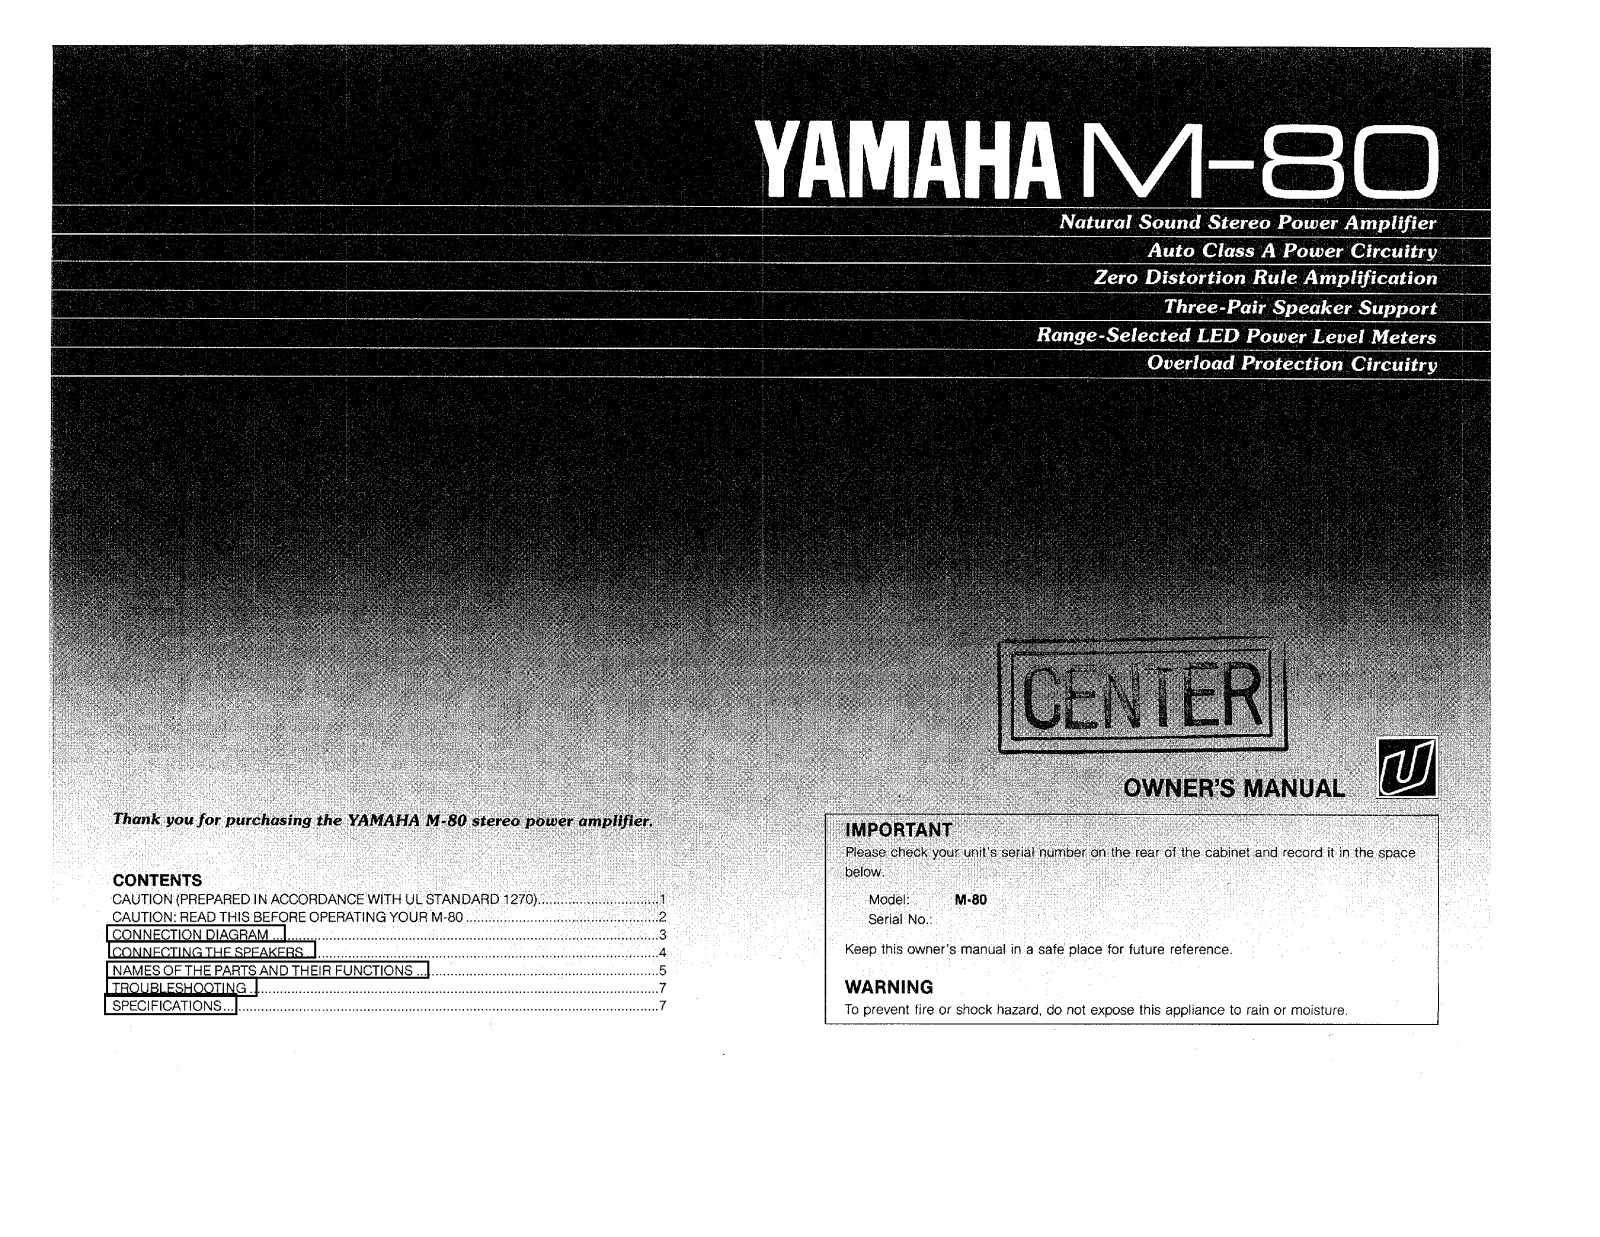 Yamaha M-80 Owners manual